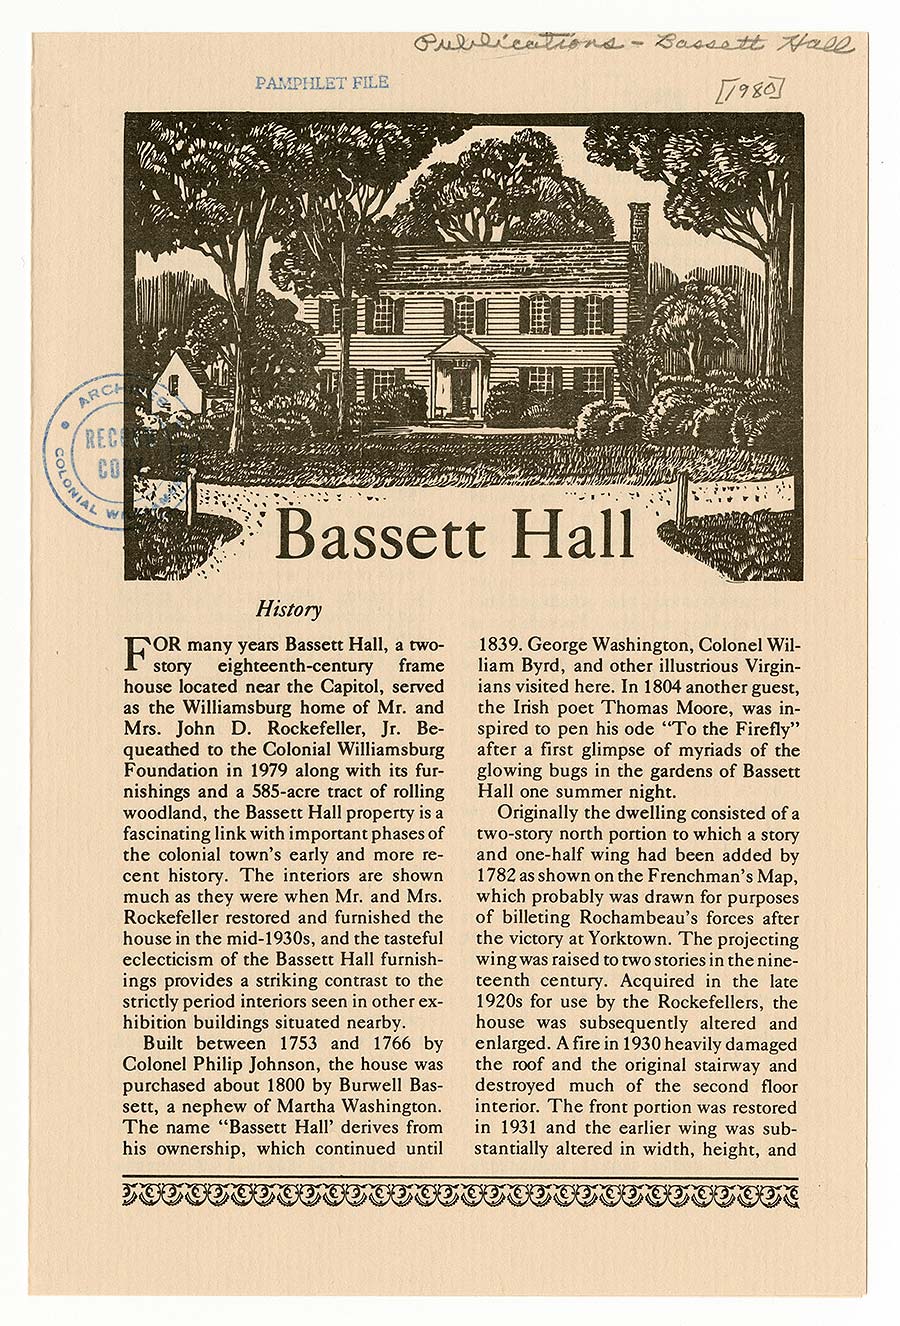 Bassett Hall Pamphlet, 1981.